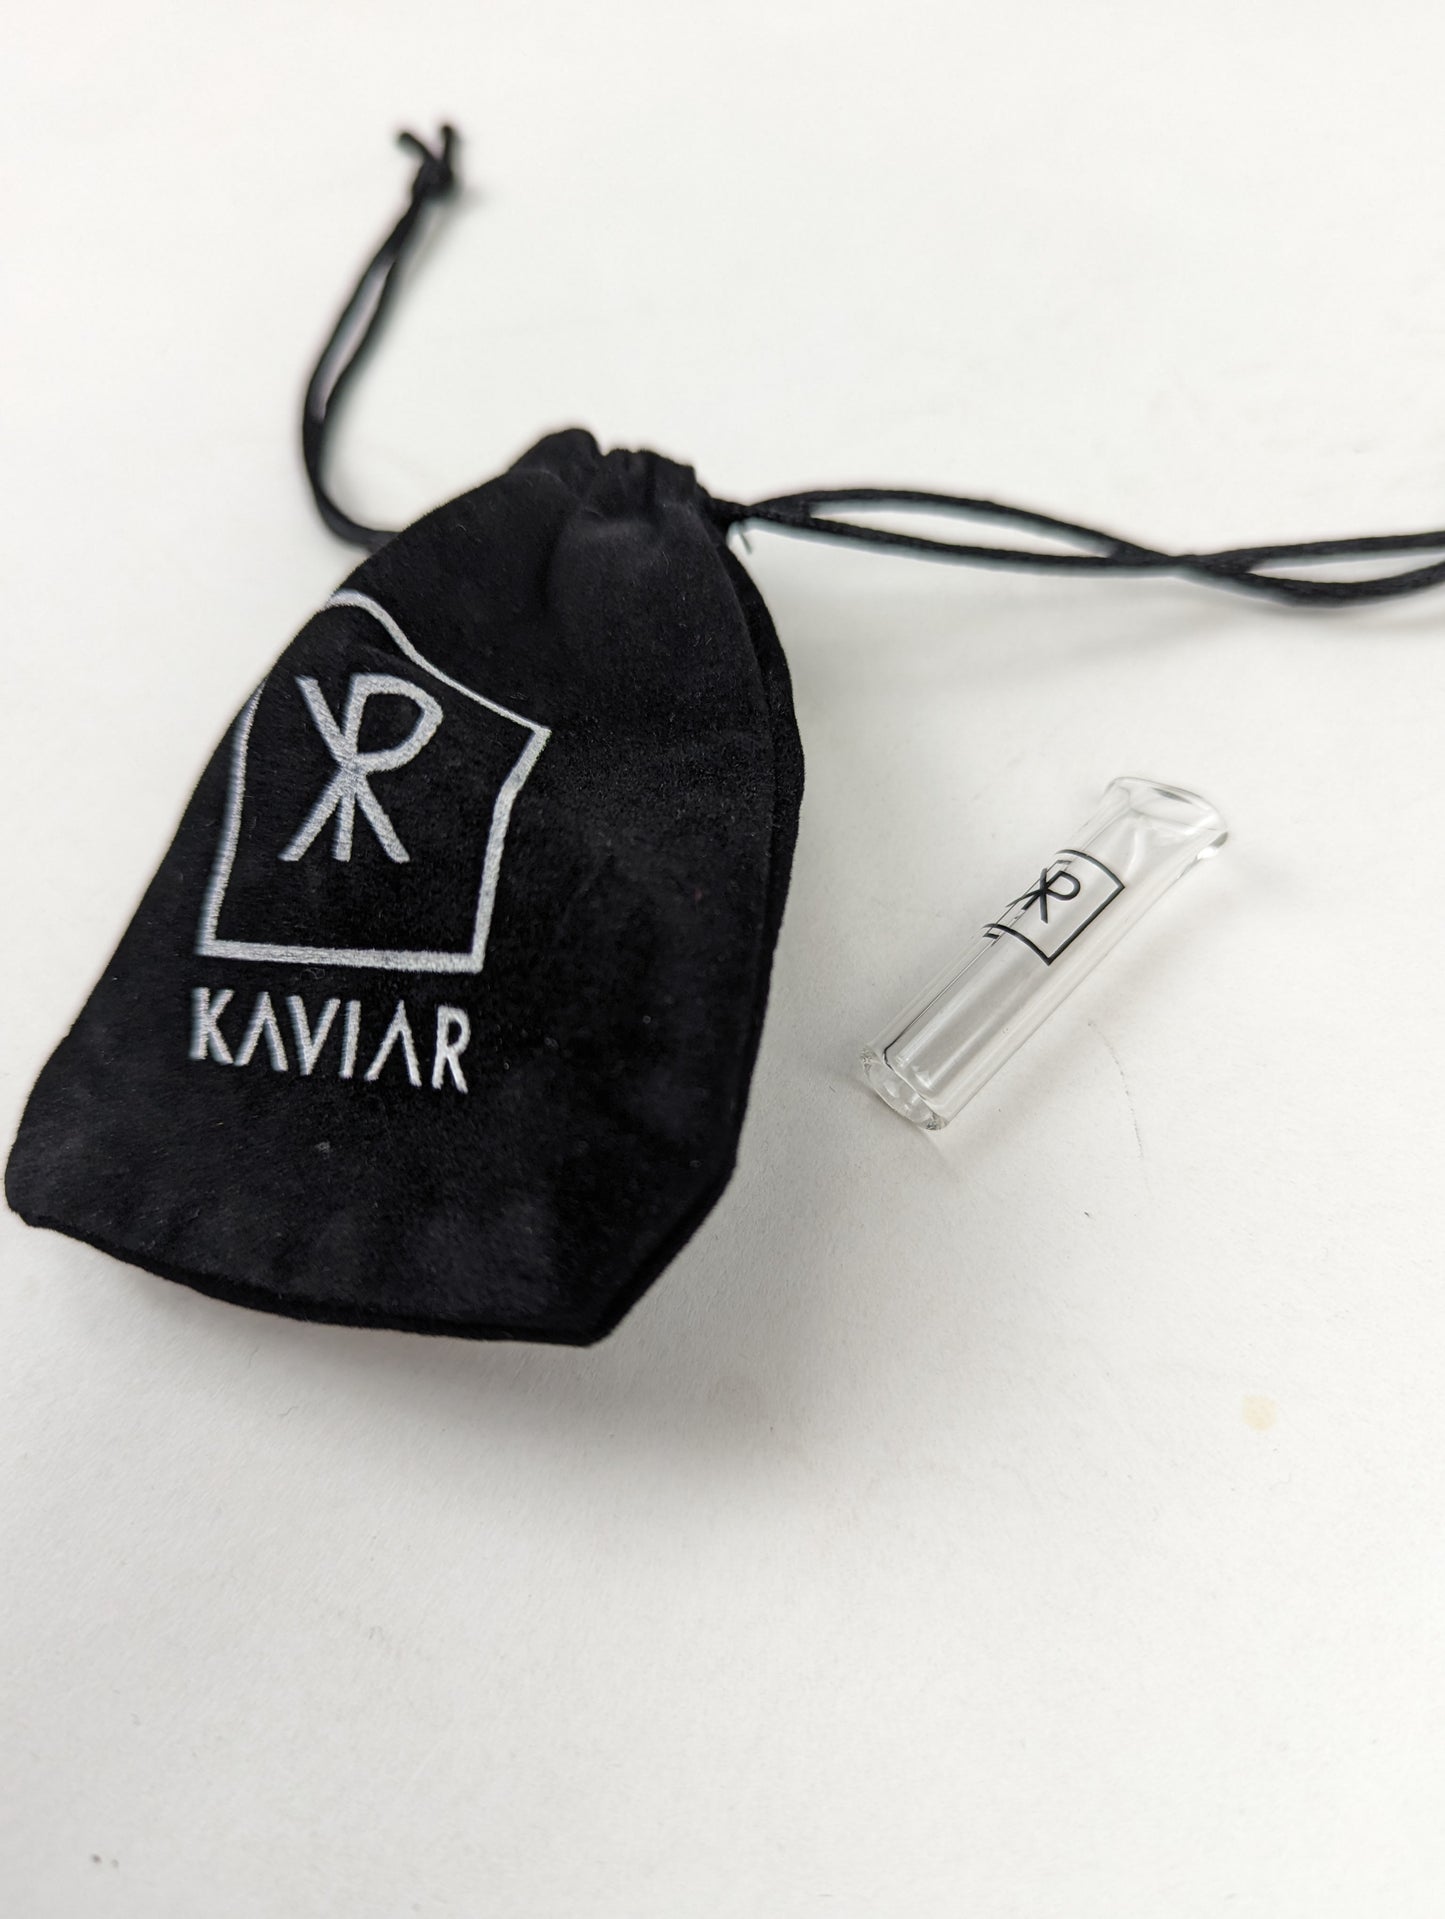 Kaviar - Just the Tip